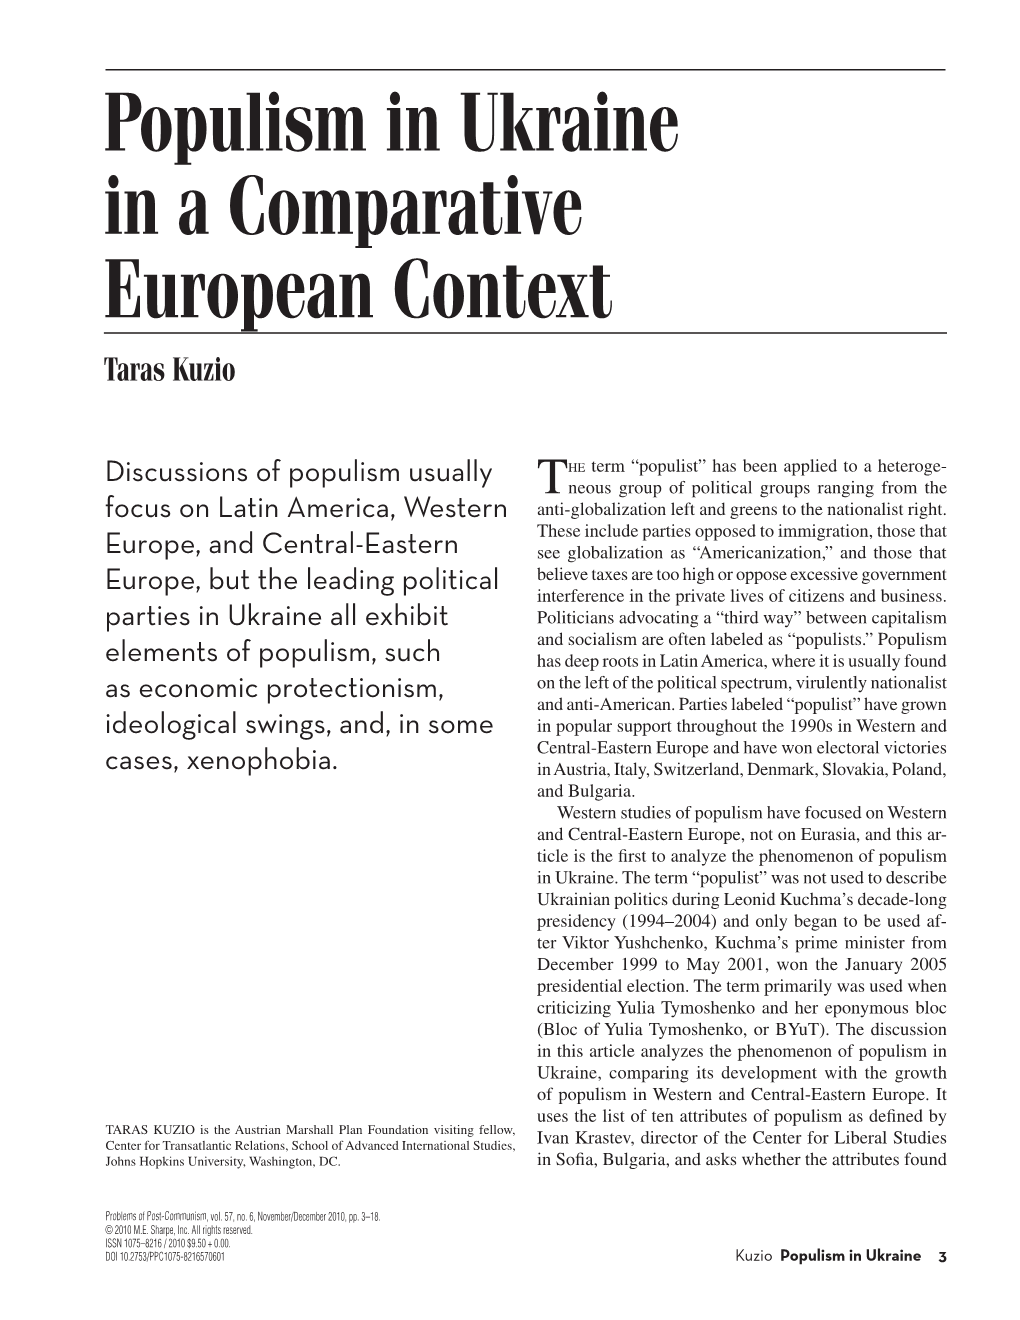 'Populism in Ukraine in Comparative European Context', Problems of Post-Communism, Vol.57, No.6